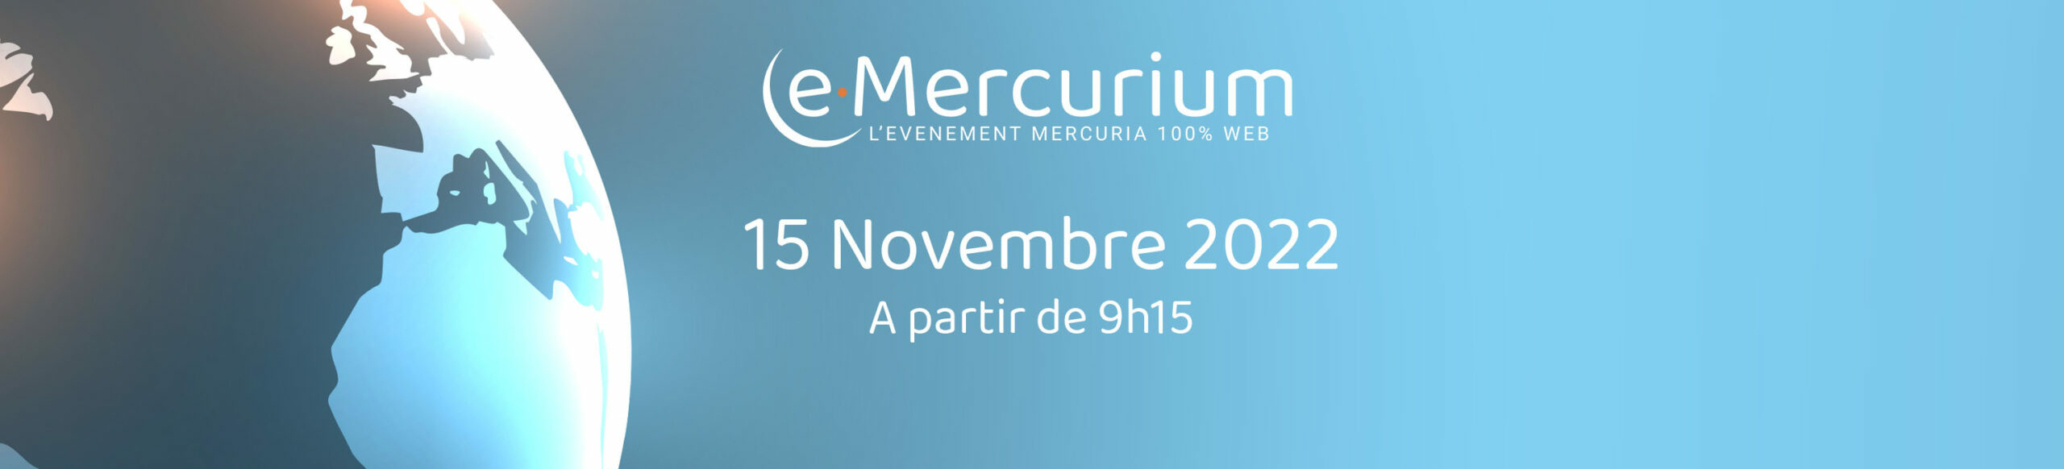 e-Mercurium 2022_bandeau invitation_15 novembre 2022_mercuria